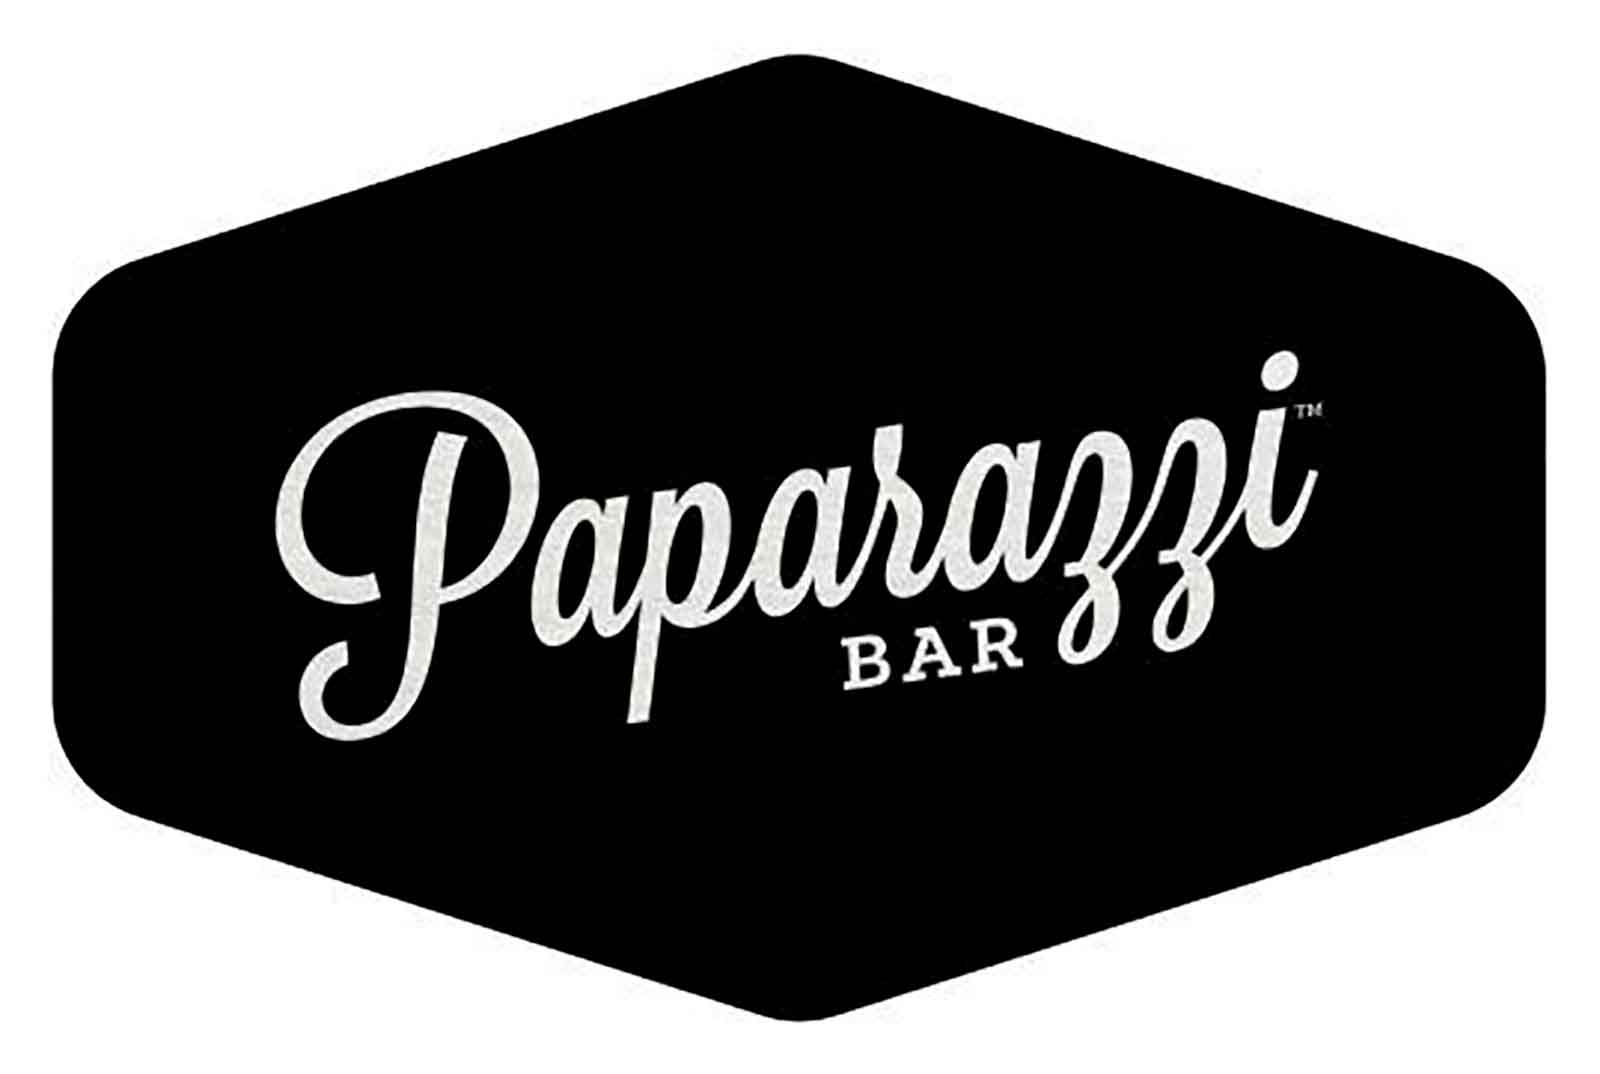 Paparazzi Bar